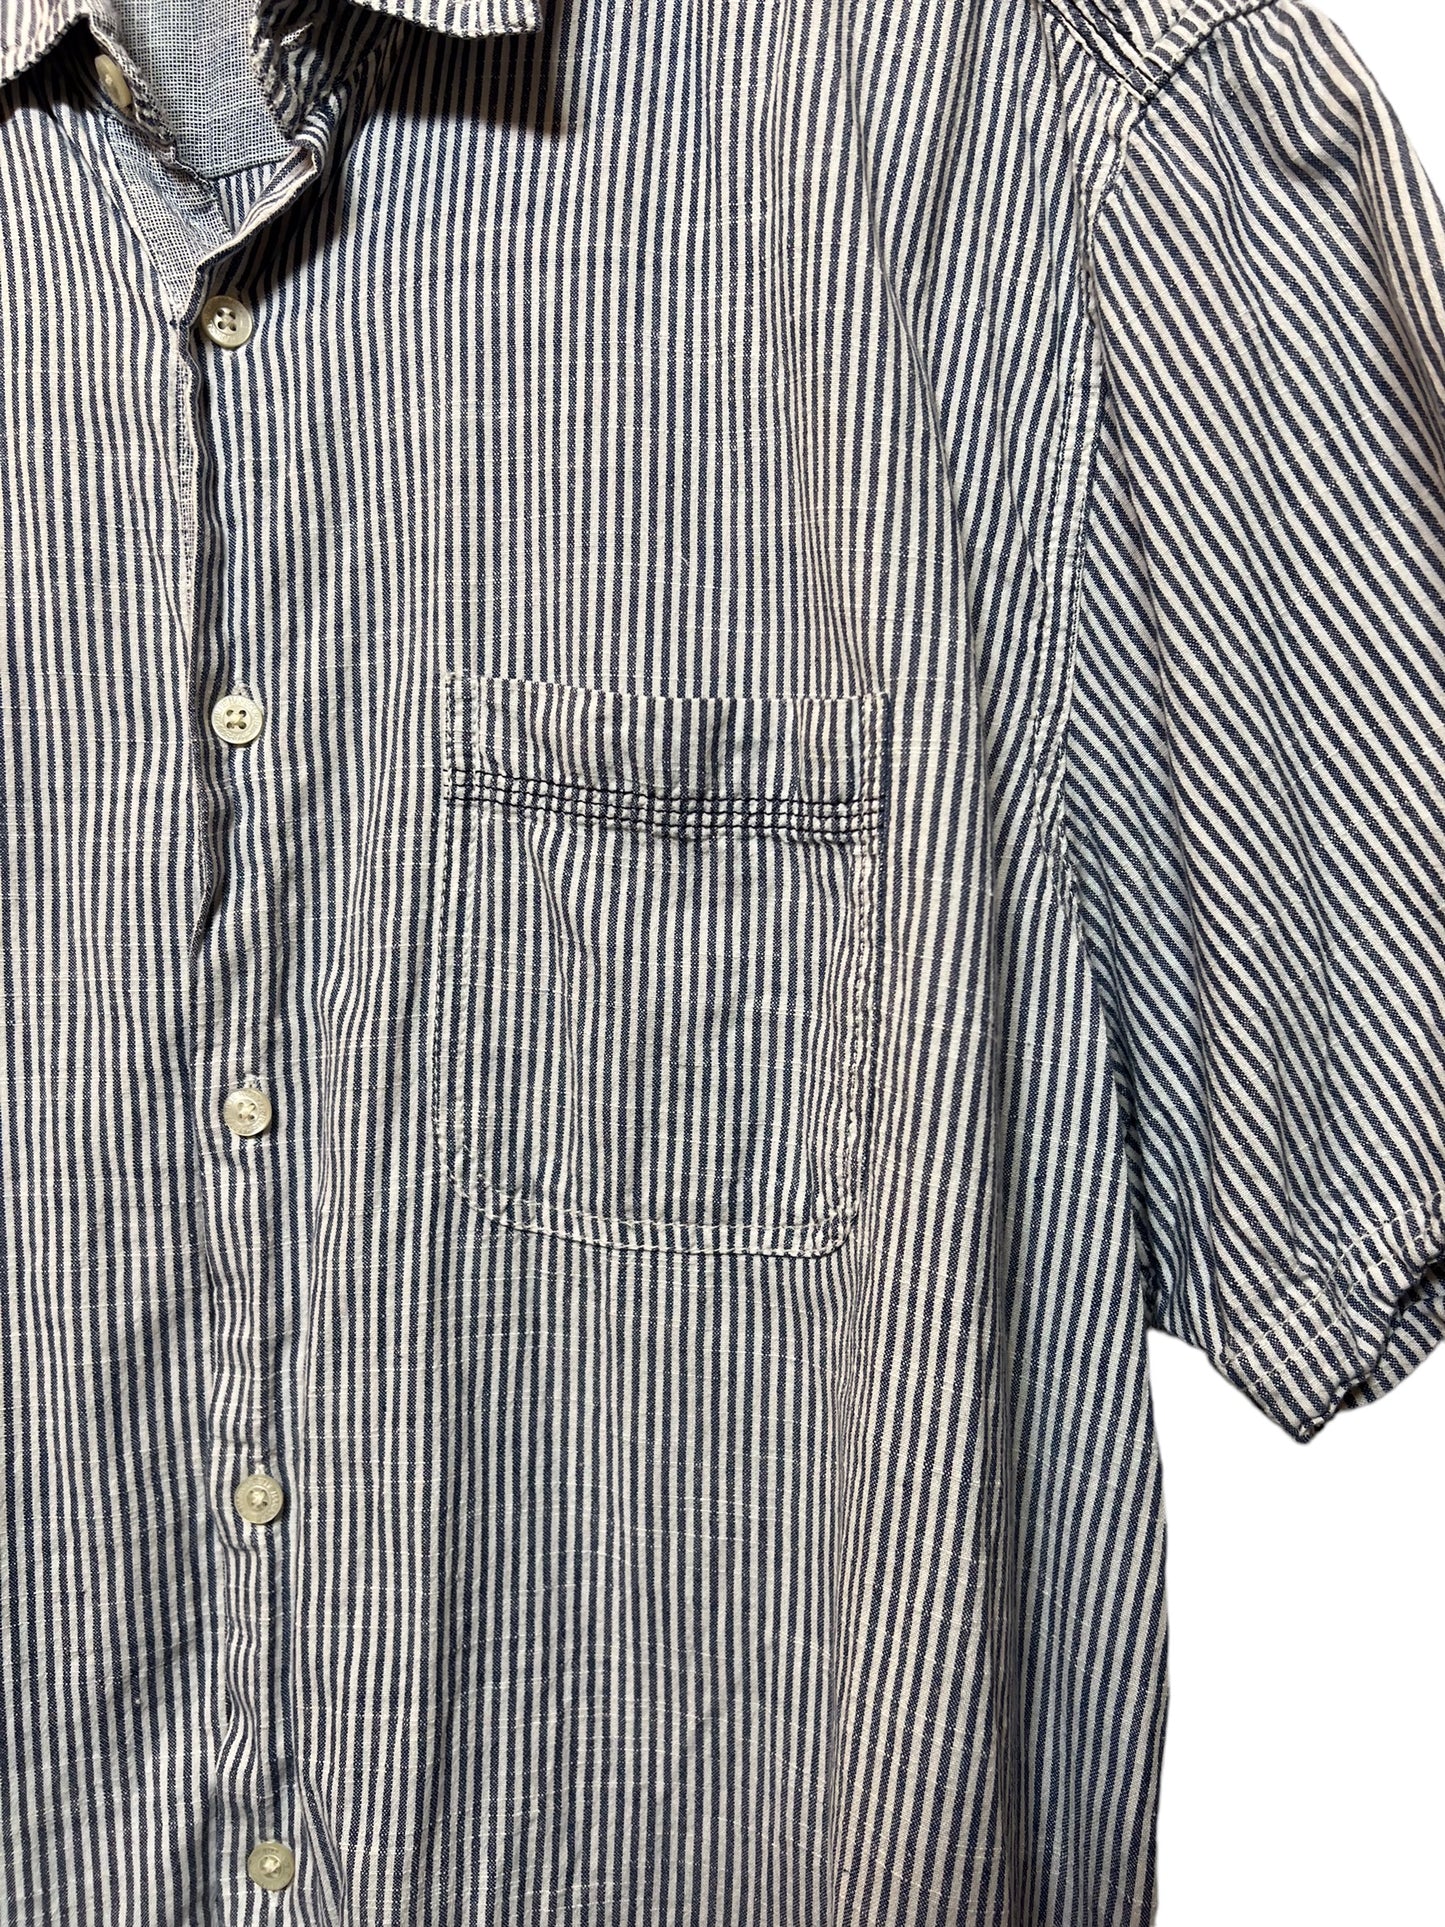 Blue Harbour Men’s Short Sleeve Shirt (Size XL)